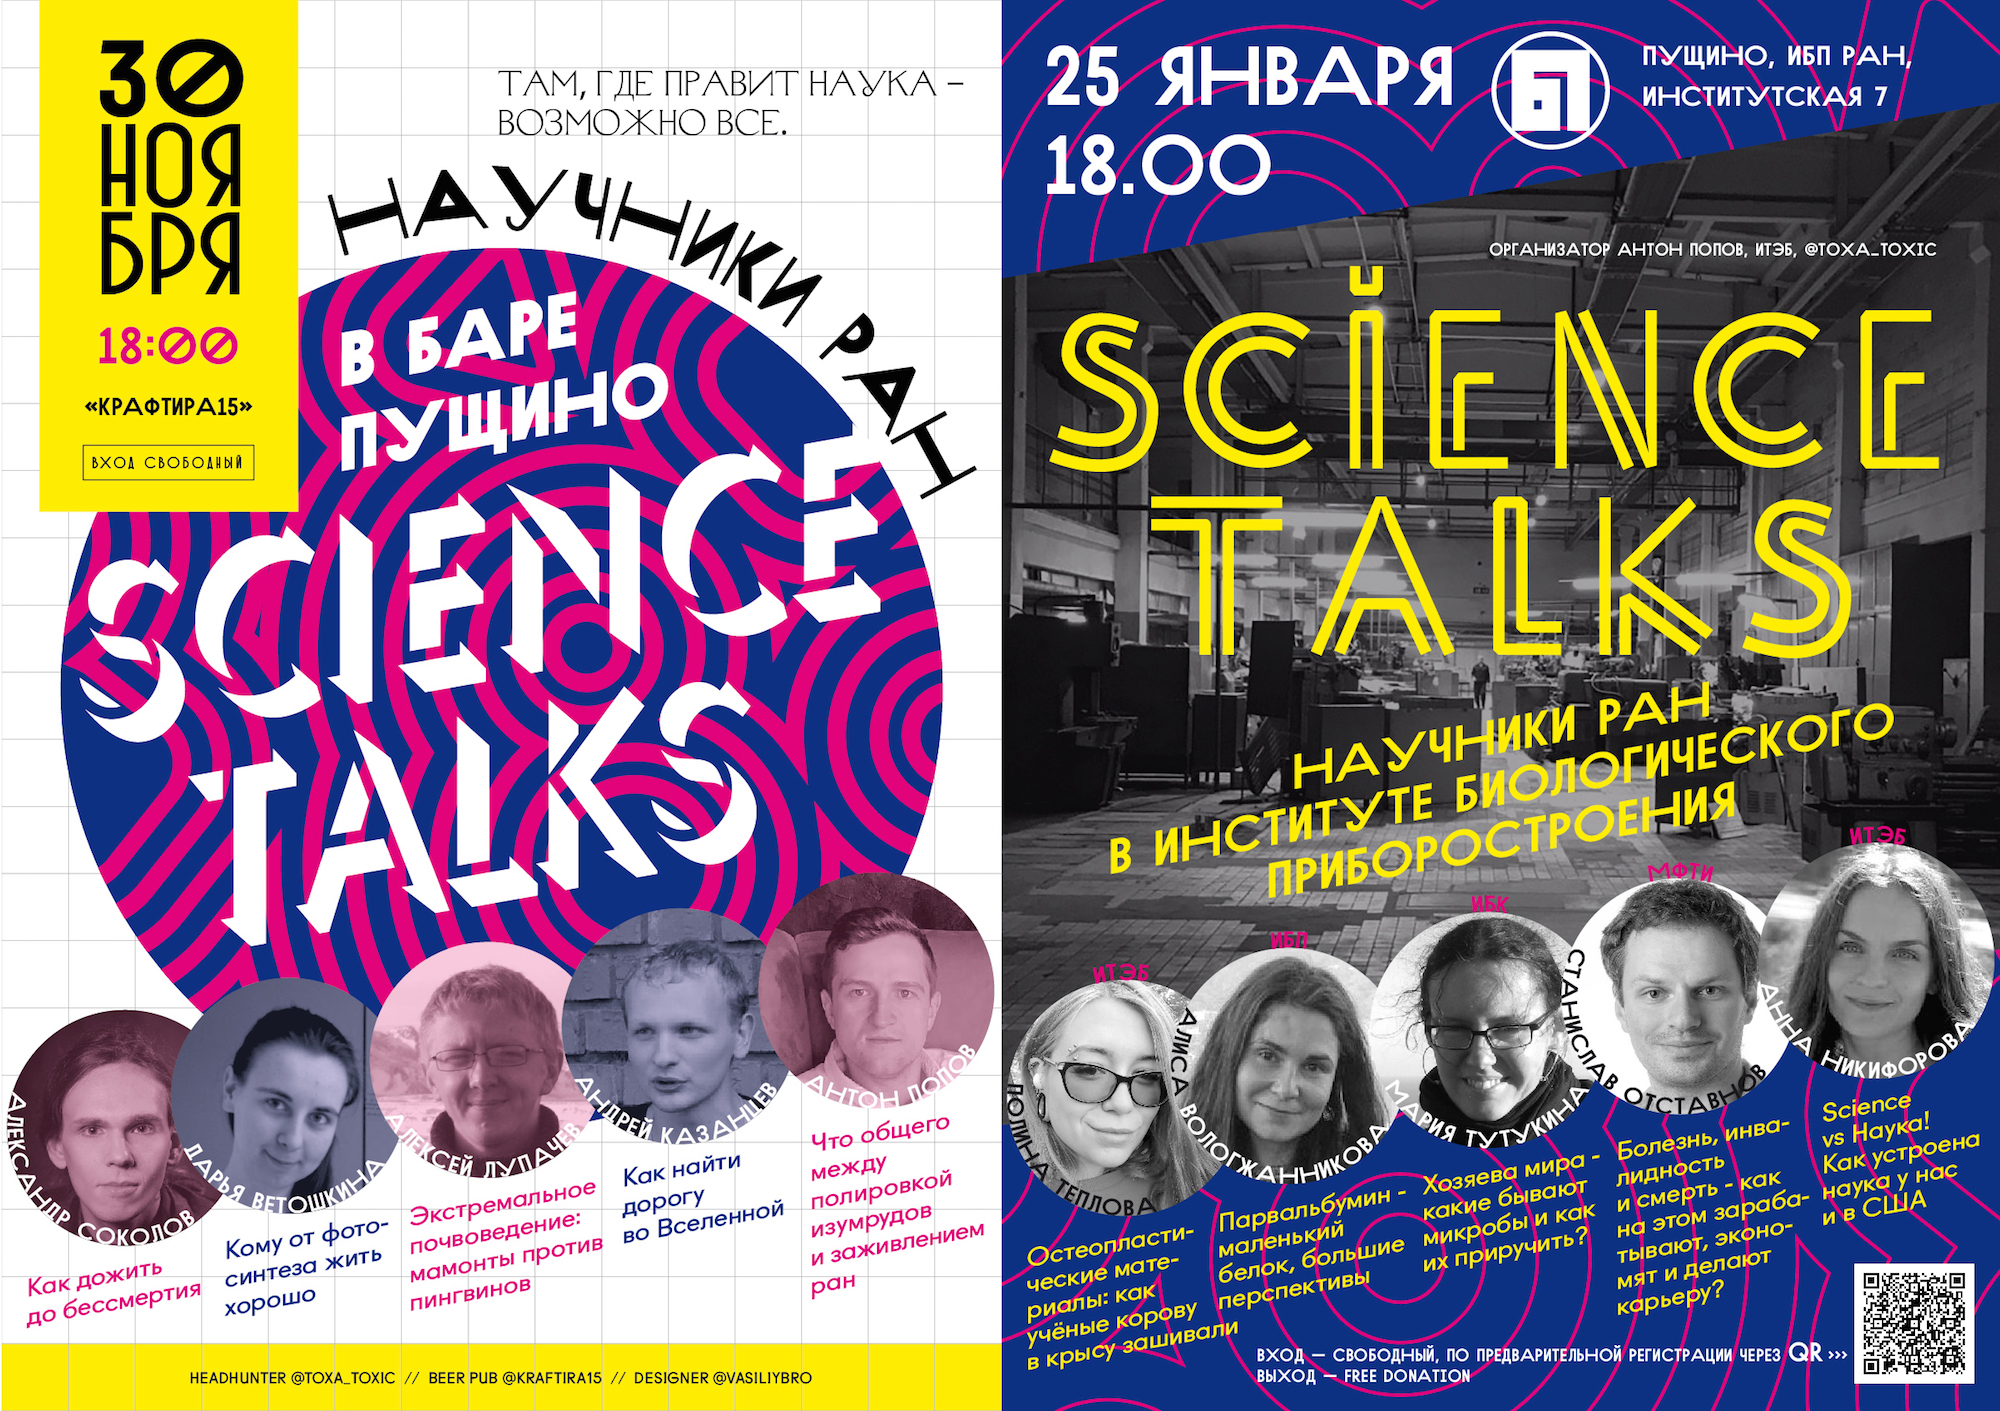 Science talks